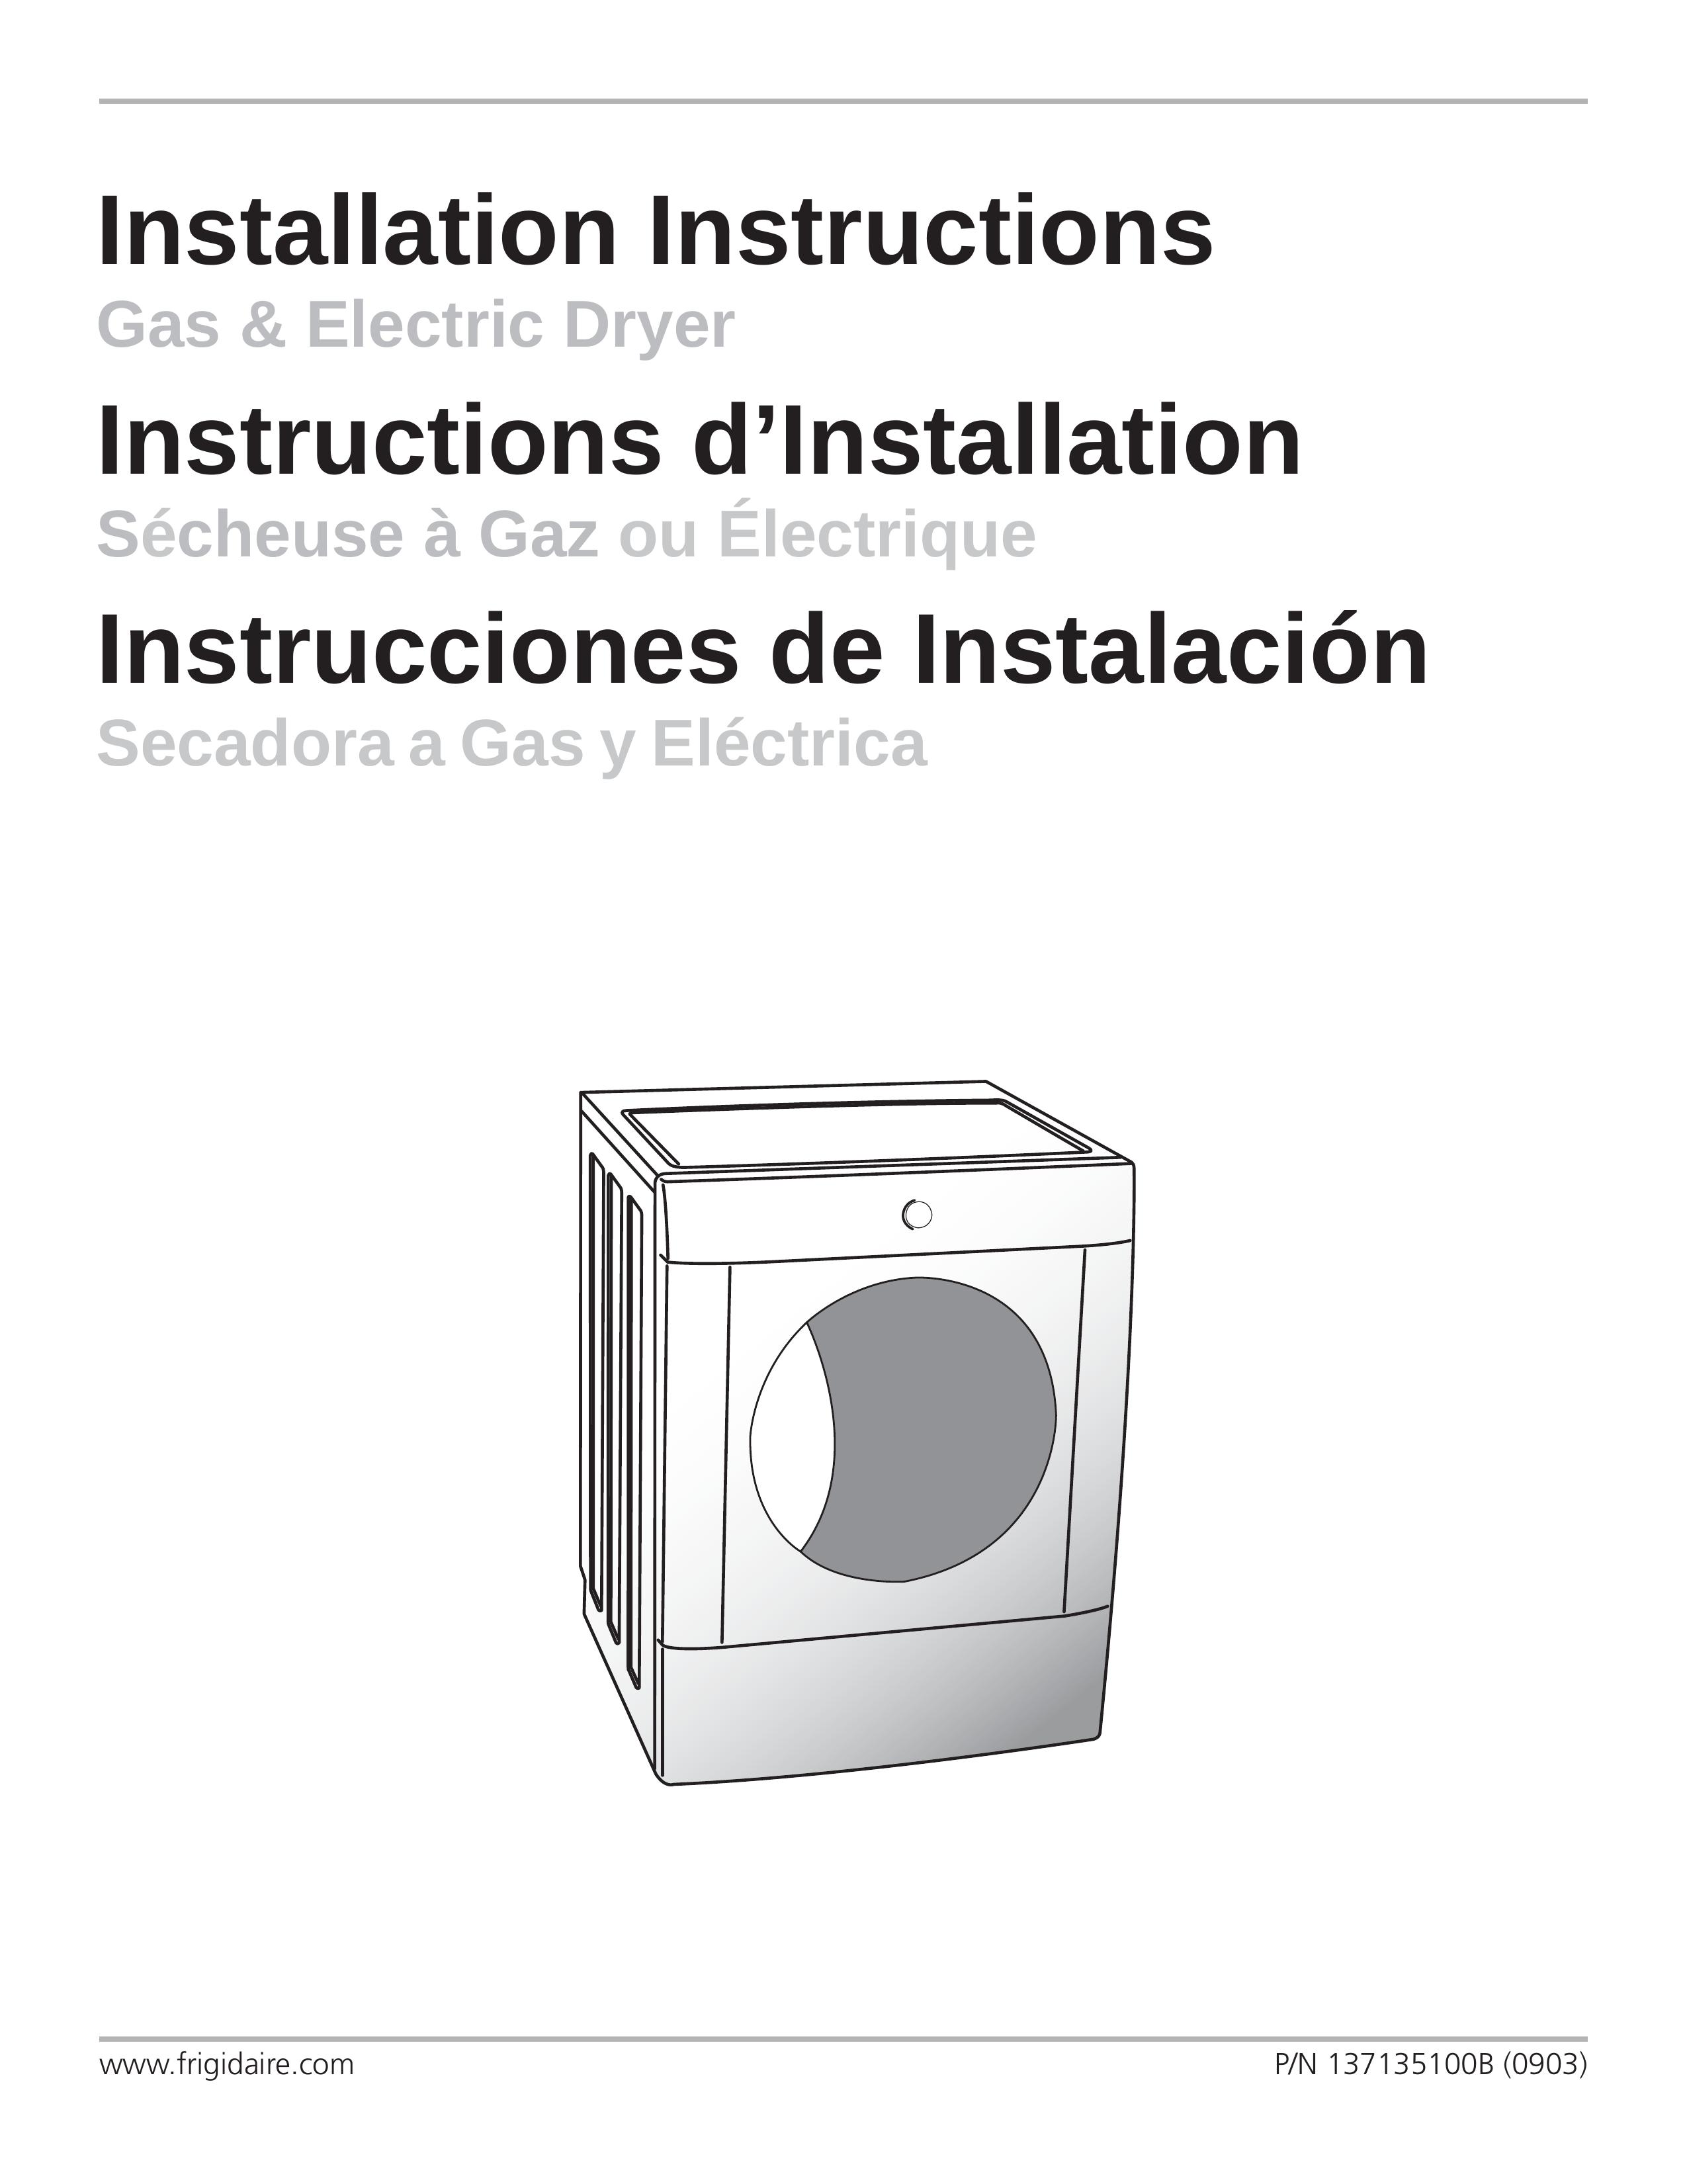 Frigidaire 137135100B Clothes Dryer User Manual